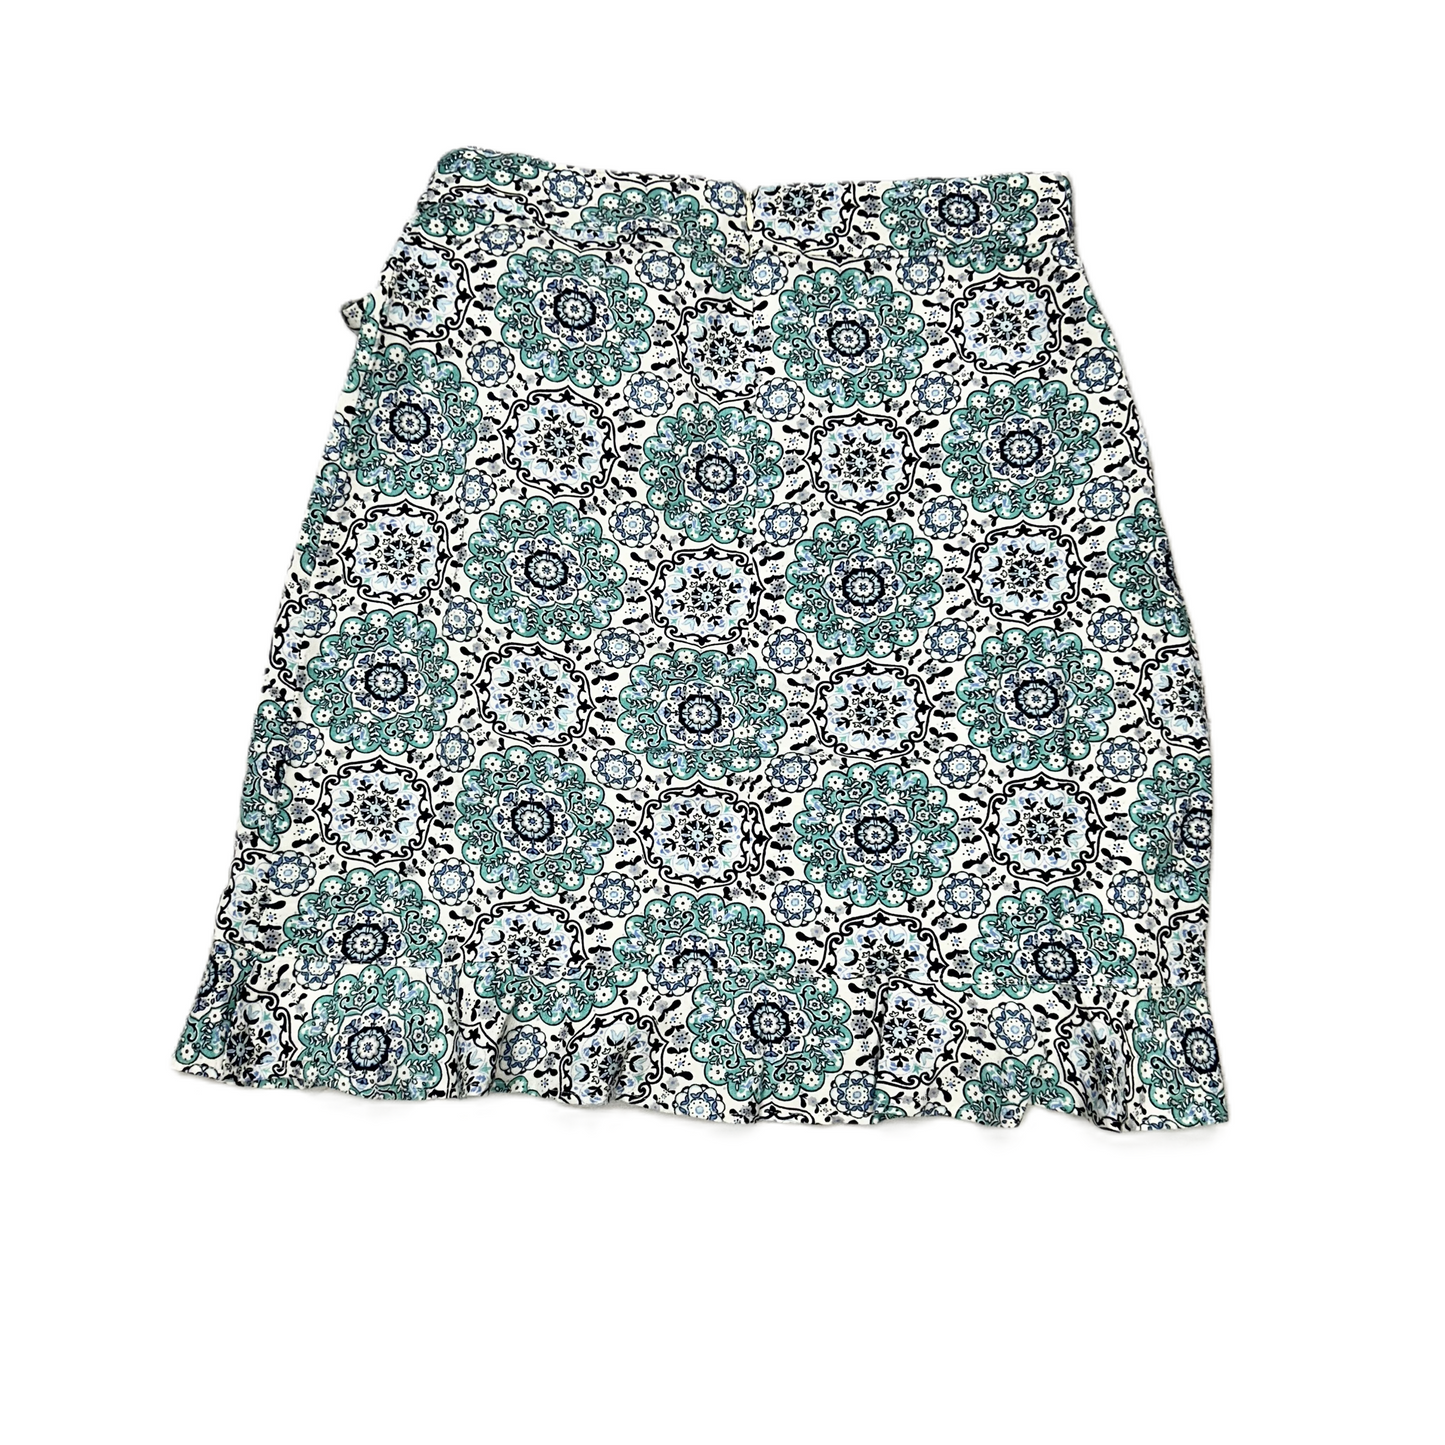 Skirt Midi By Loft  Size: 2